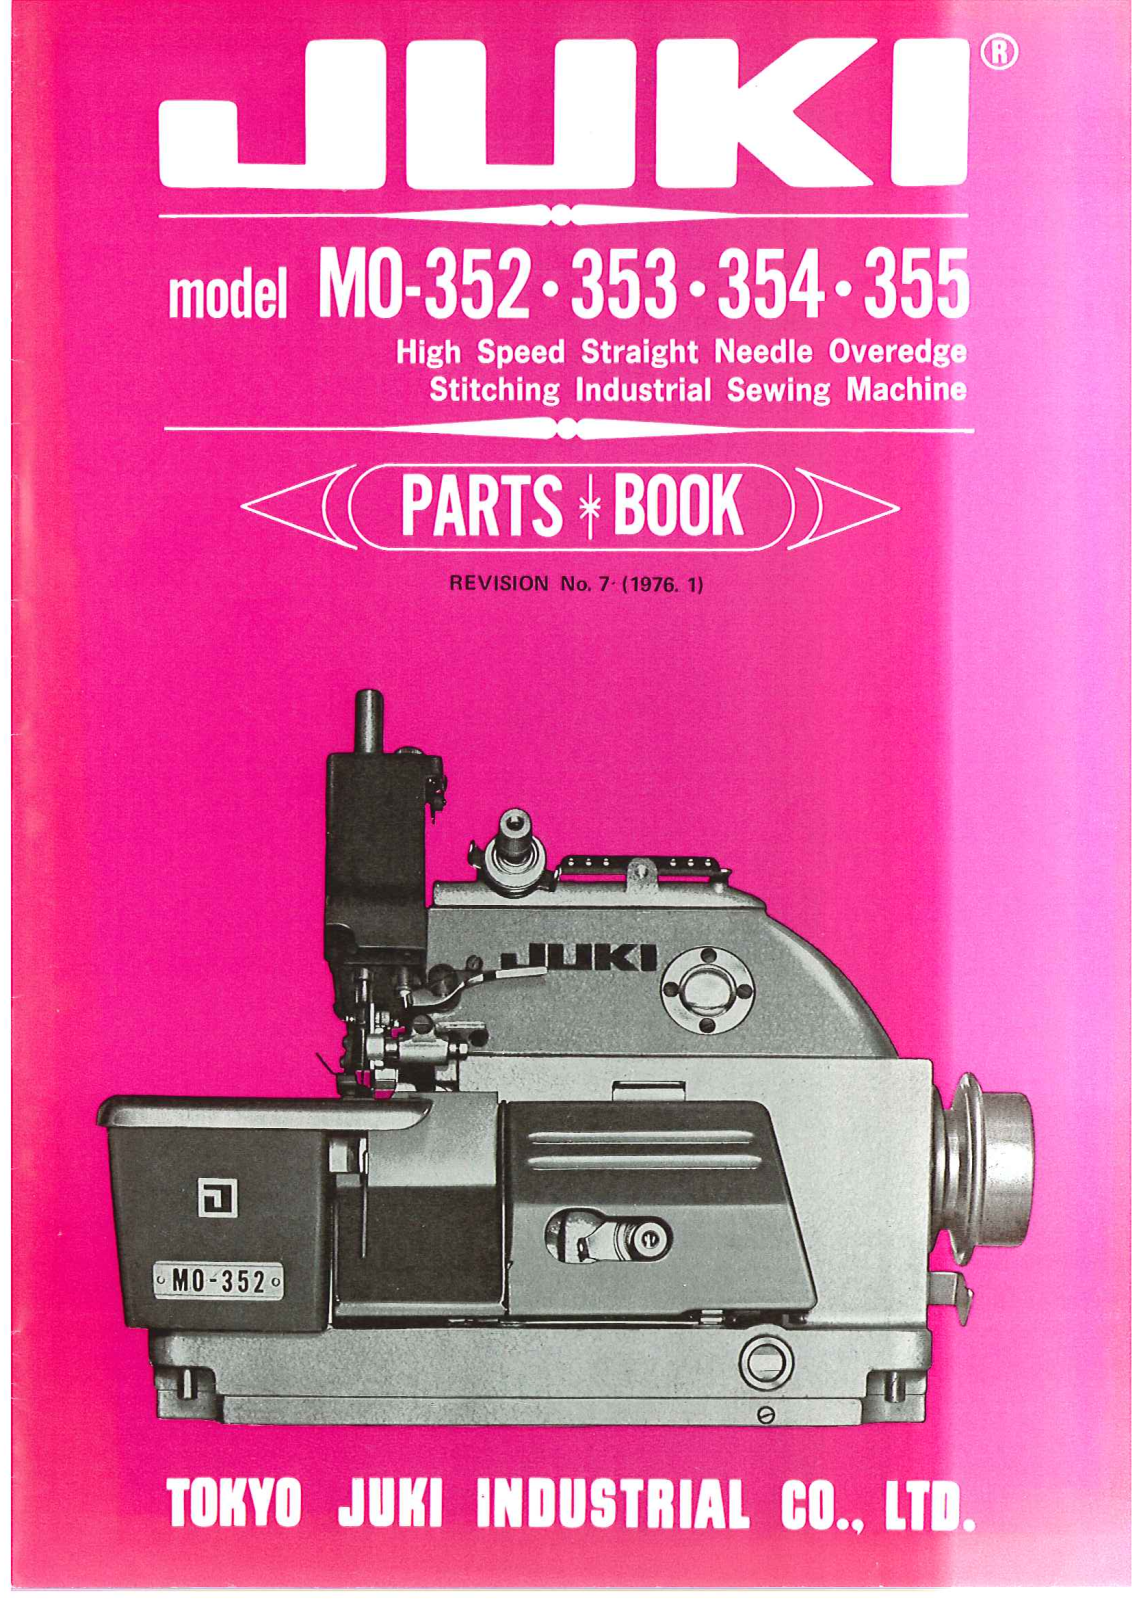 Juki MO-352, MOG-353, MOG-354, MOG-355 Parts List